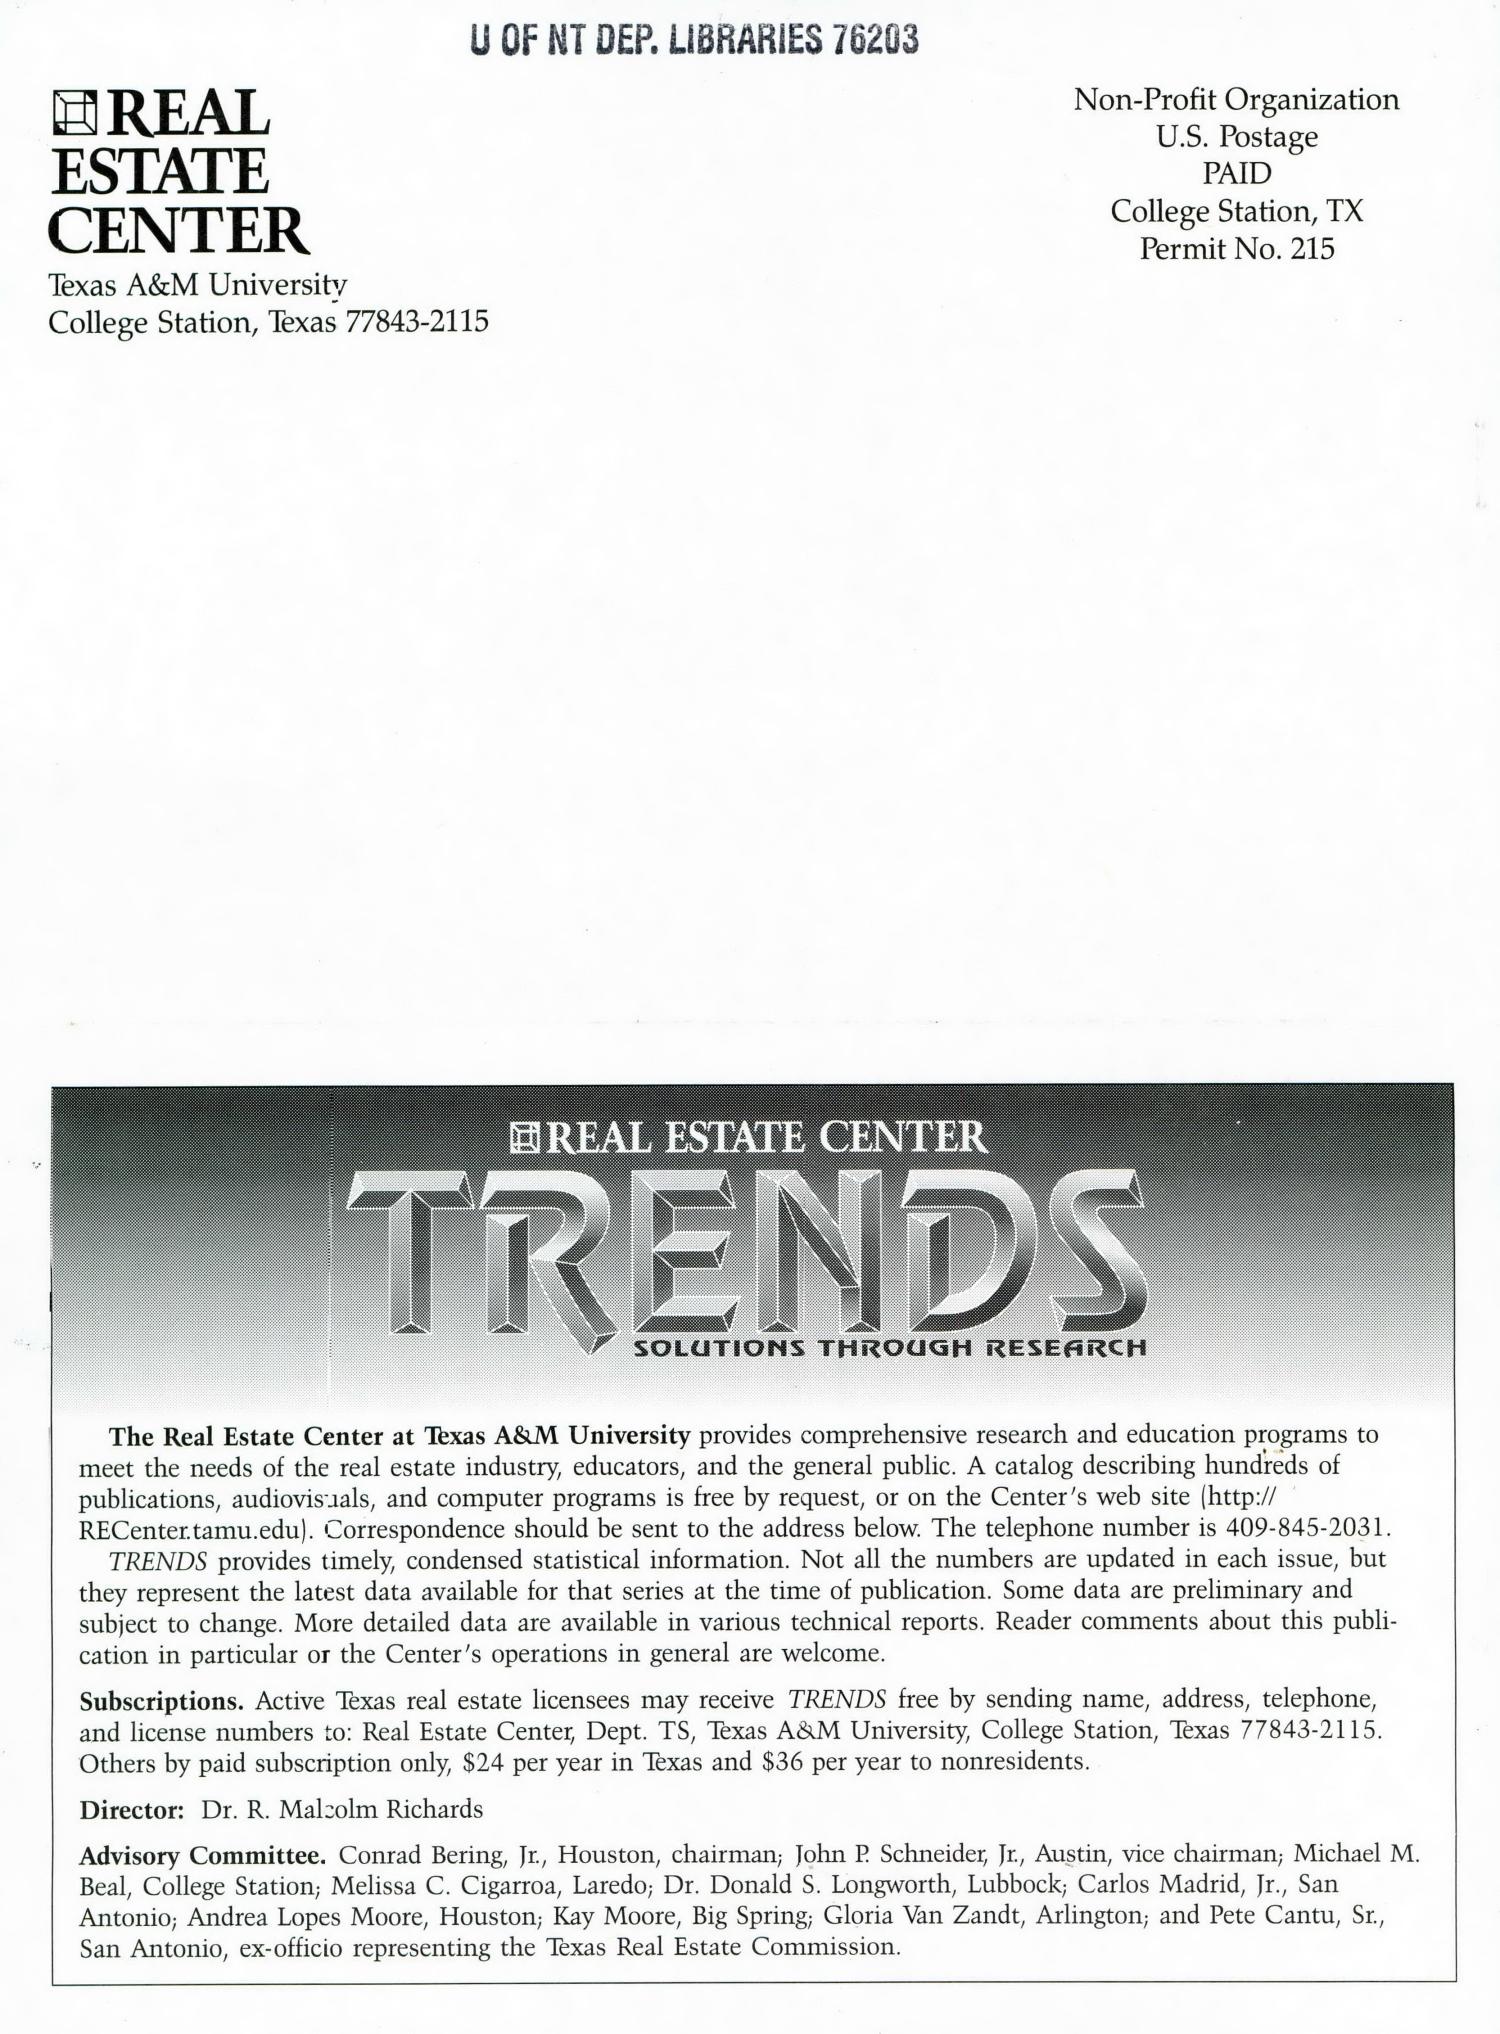 Texas Real Estate Center Trends, Volume 9, Number 9, June 1996
                                                
                                                    Back Cover
                                                